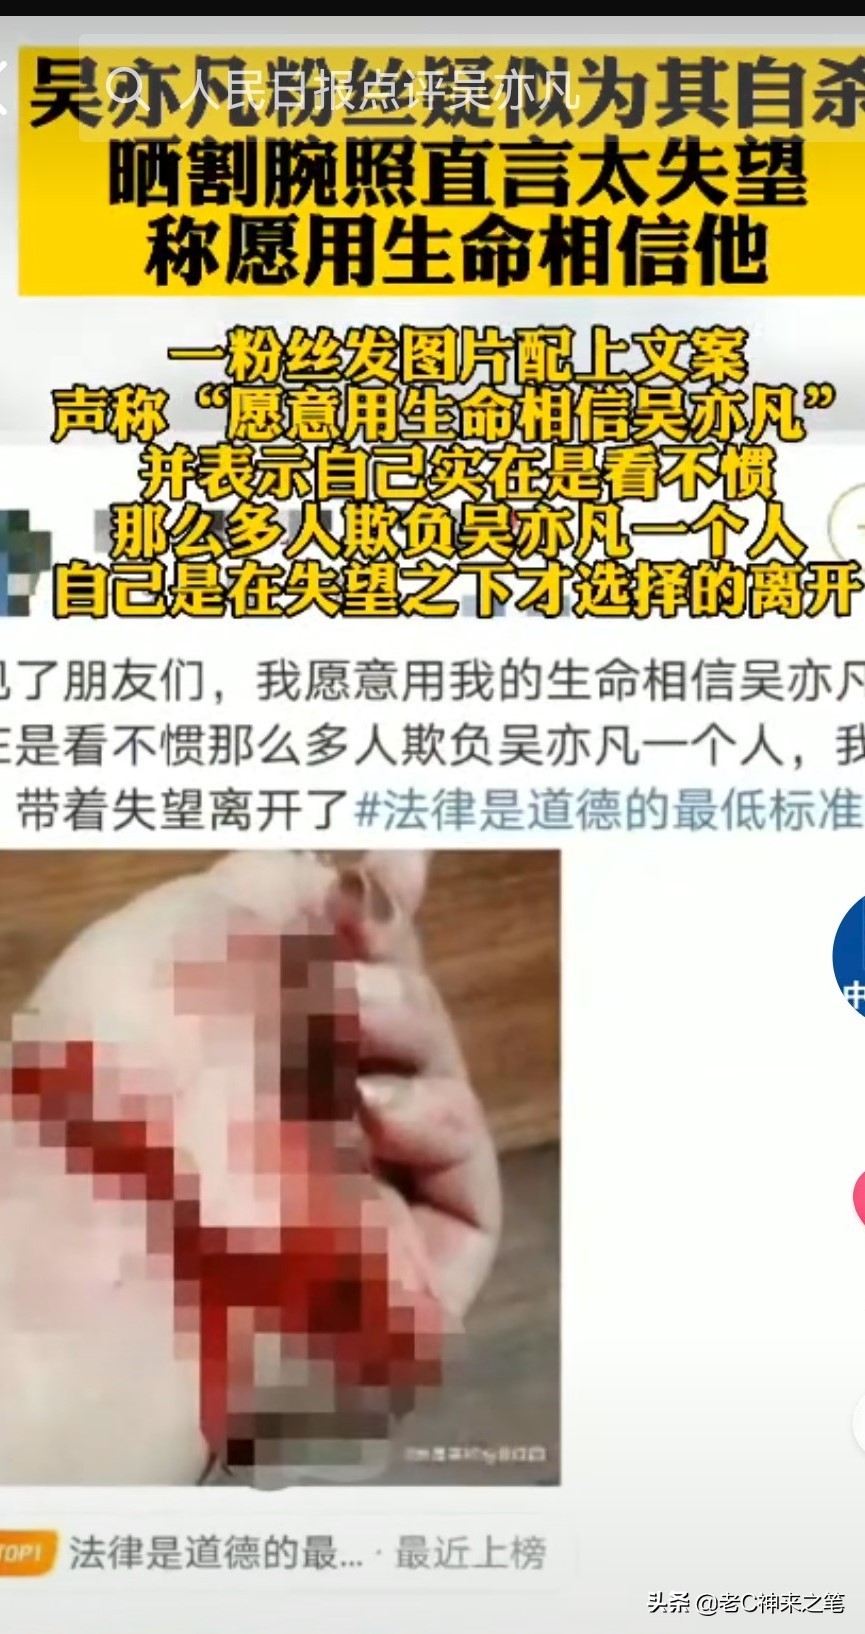 C/W] Unconfirmed rumors of Kris Wu committing suicide stir up commotion in  various online communities